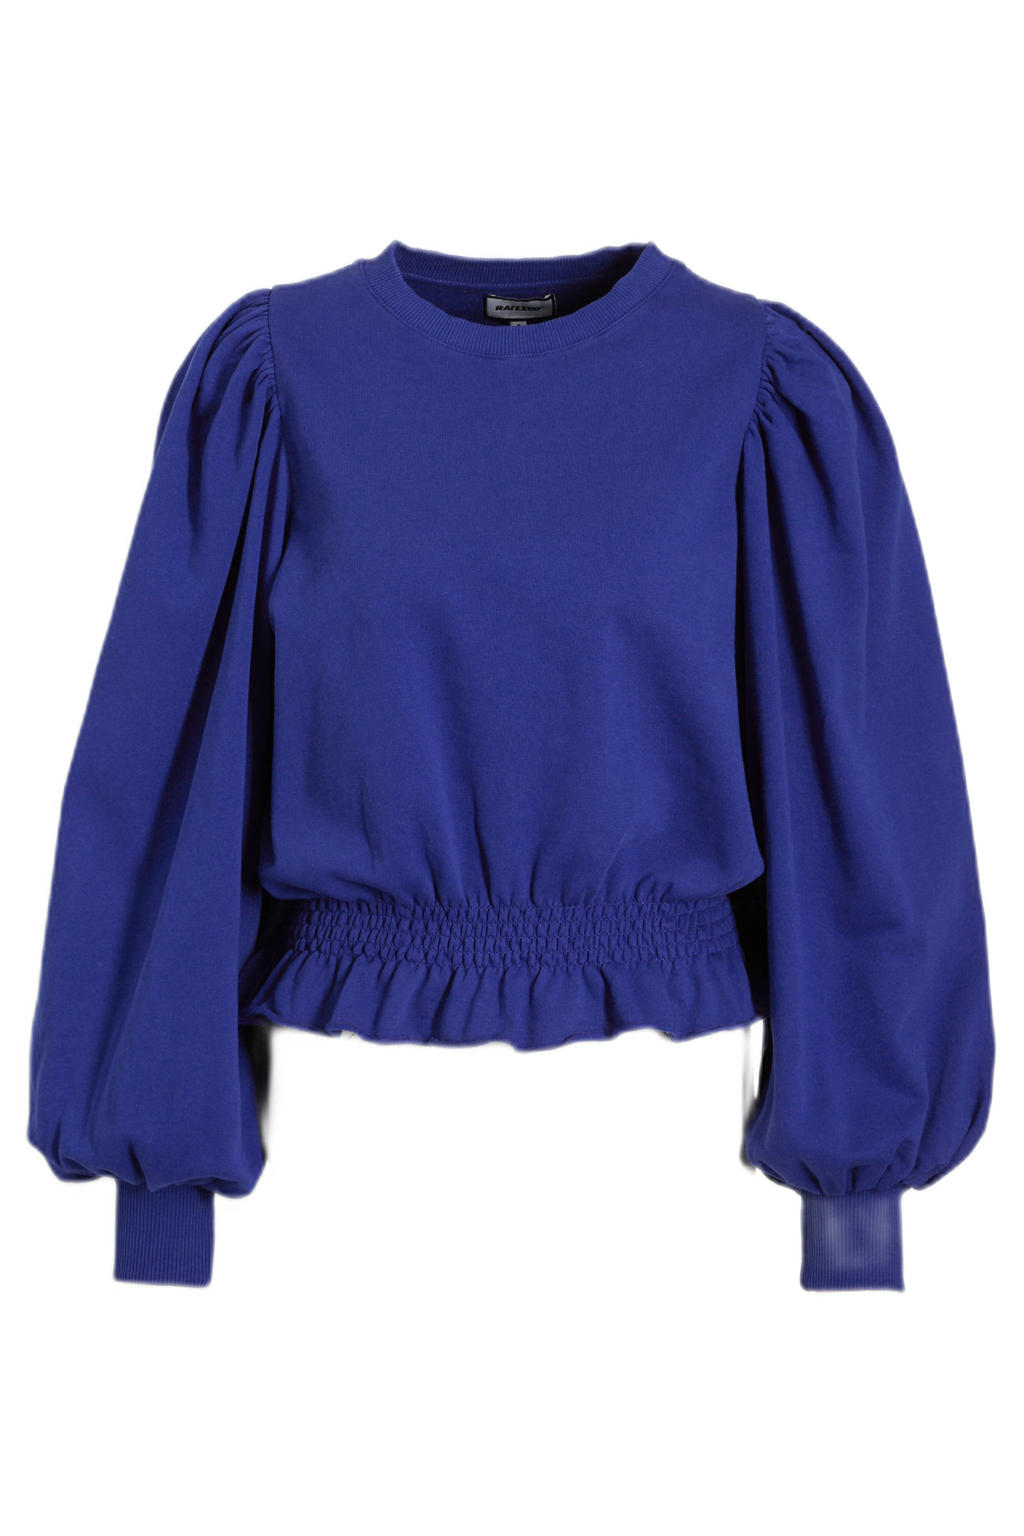 Raizzed sweater Merve blauw